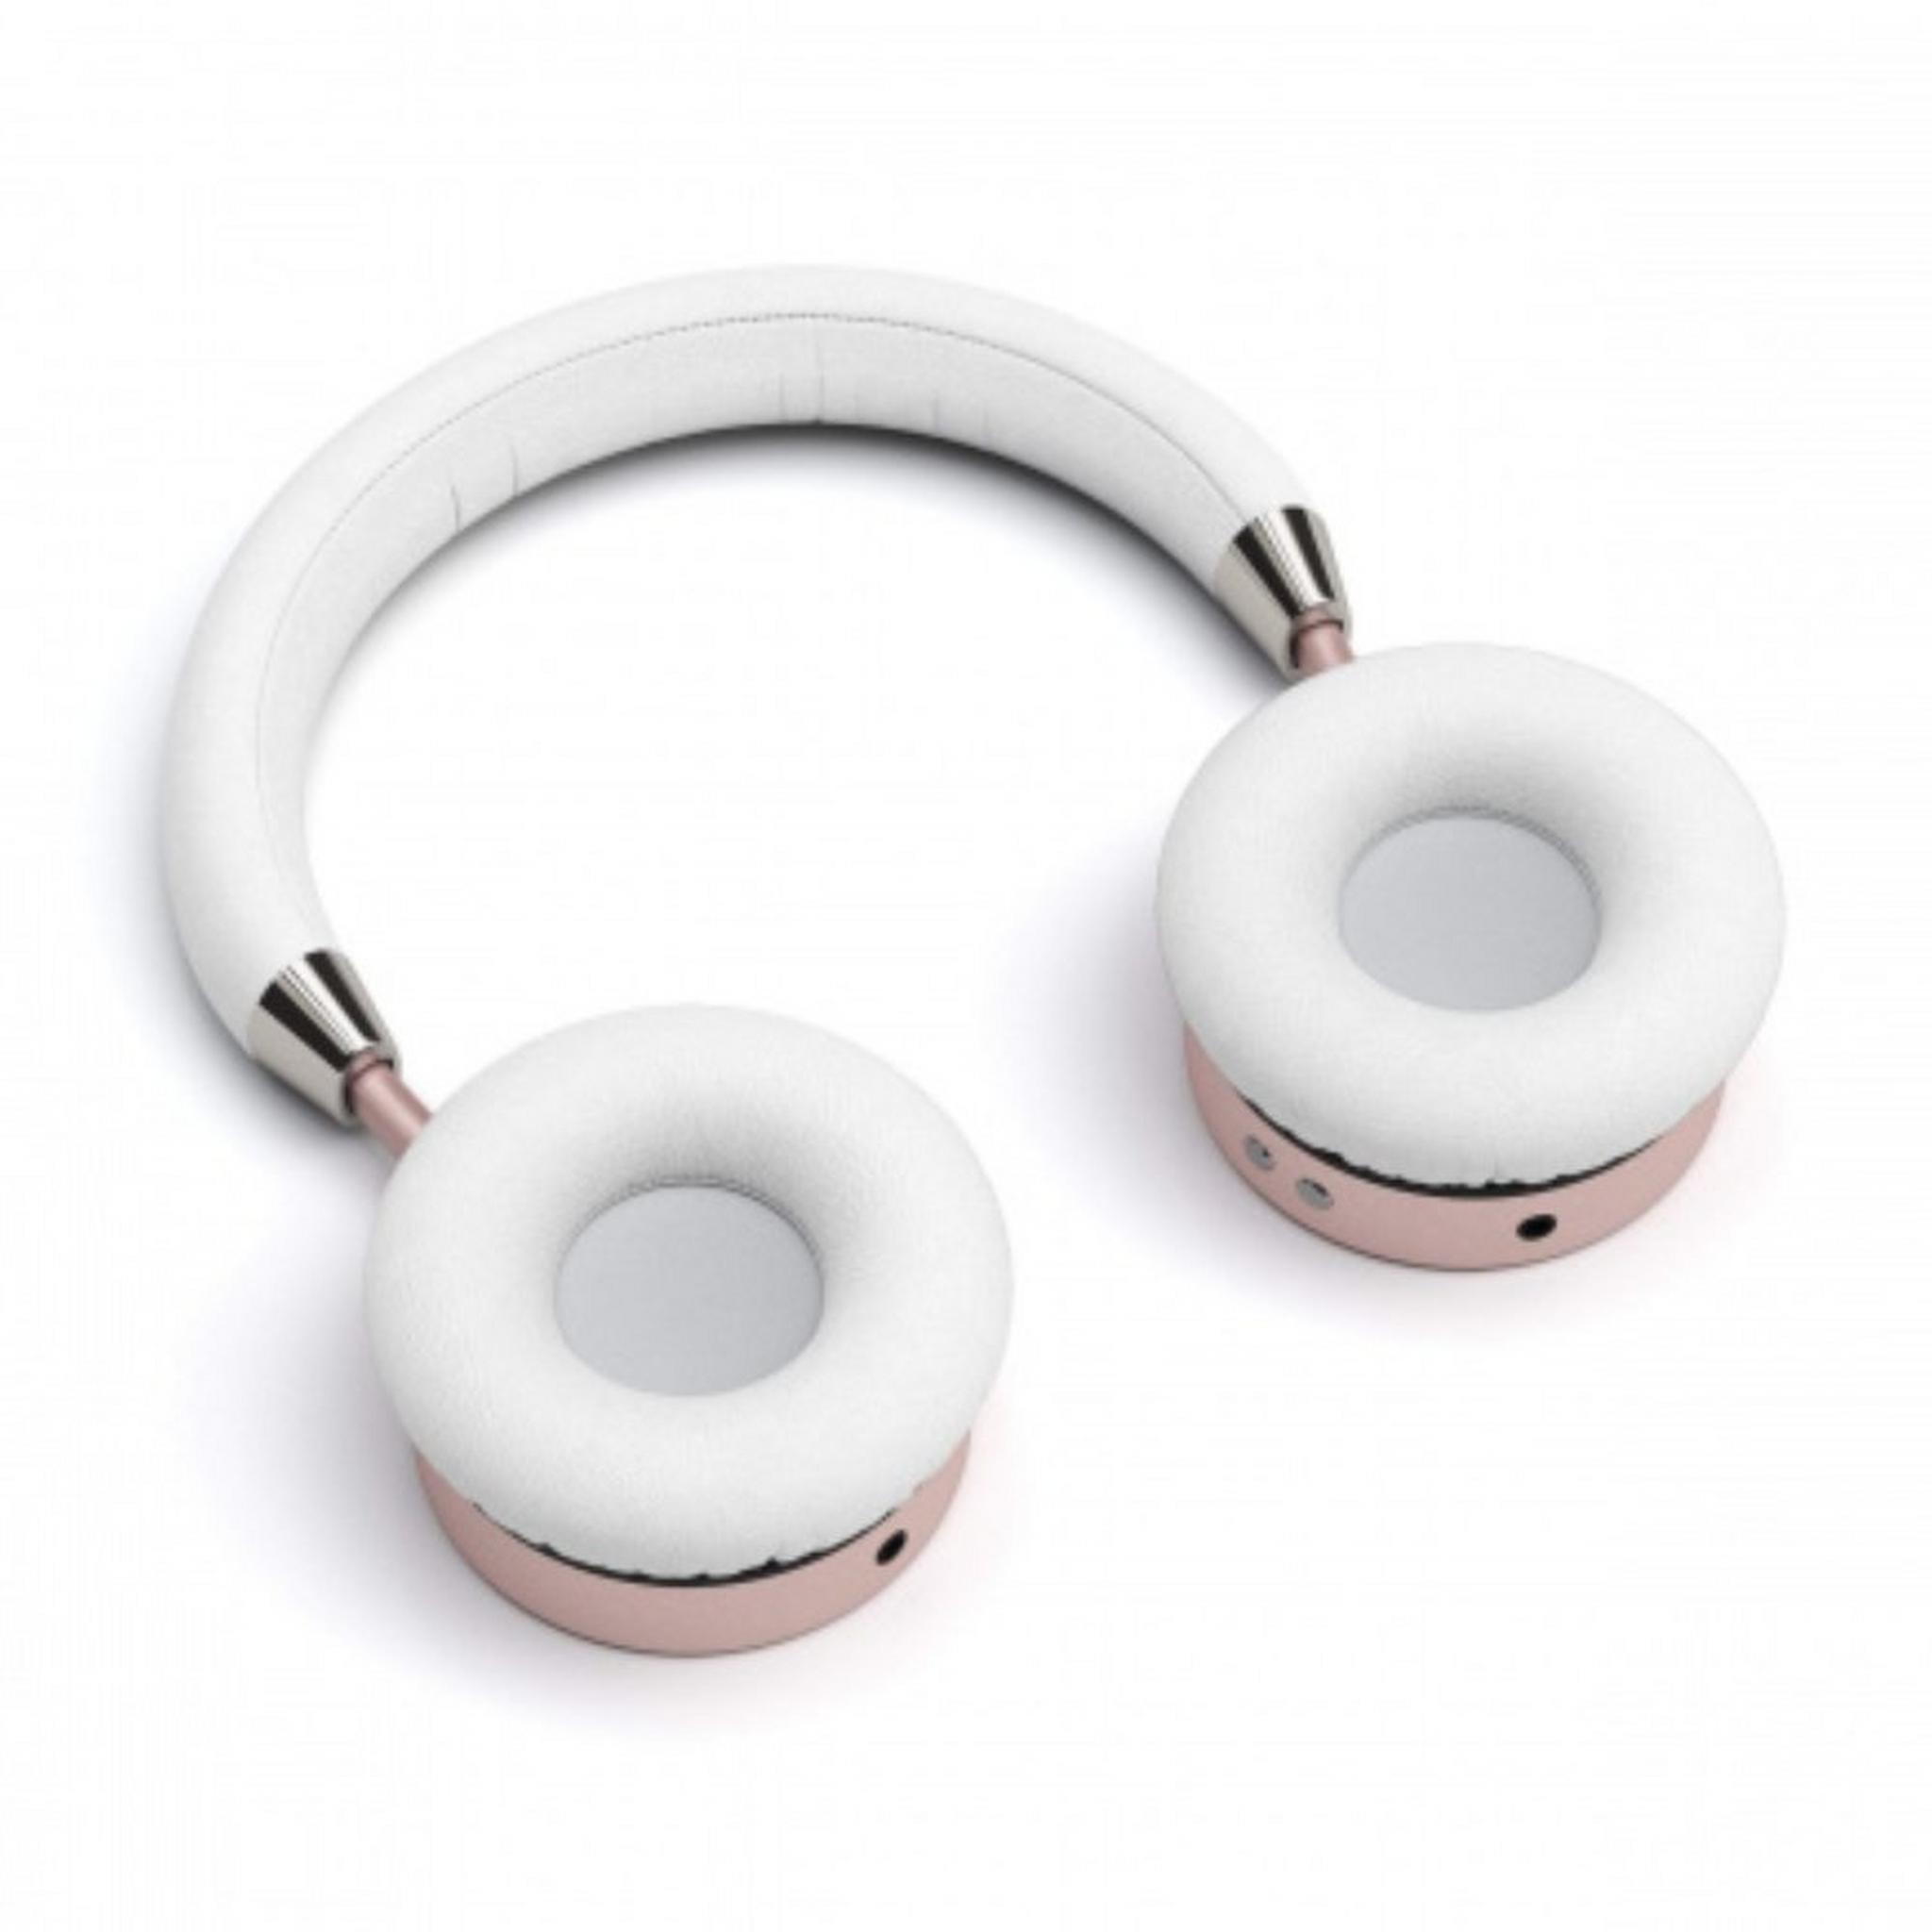 Satechi Aluminum Wireless Headphones - Rose Gold